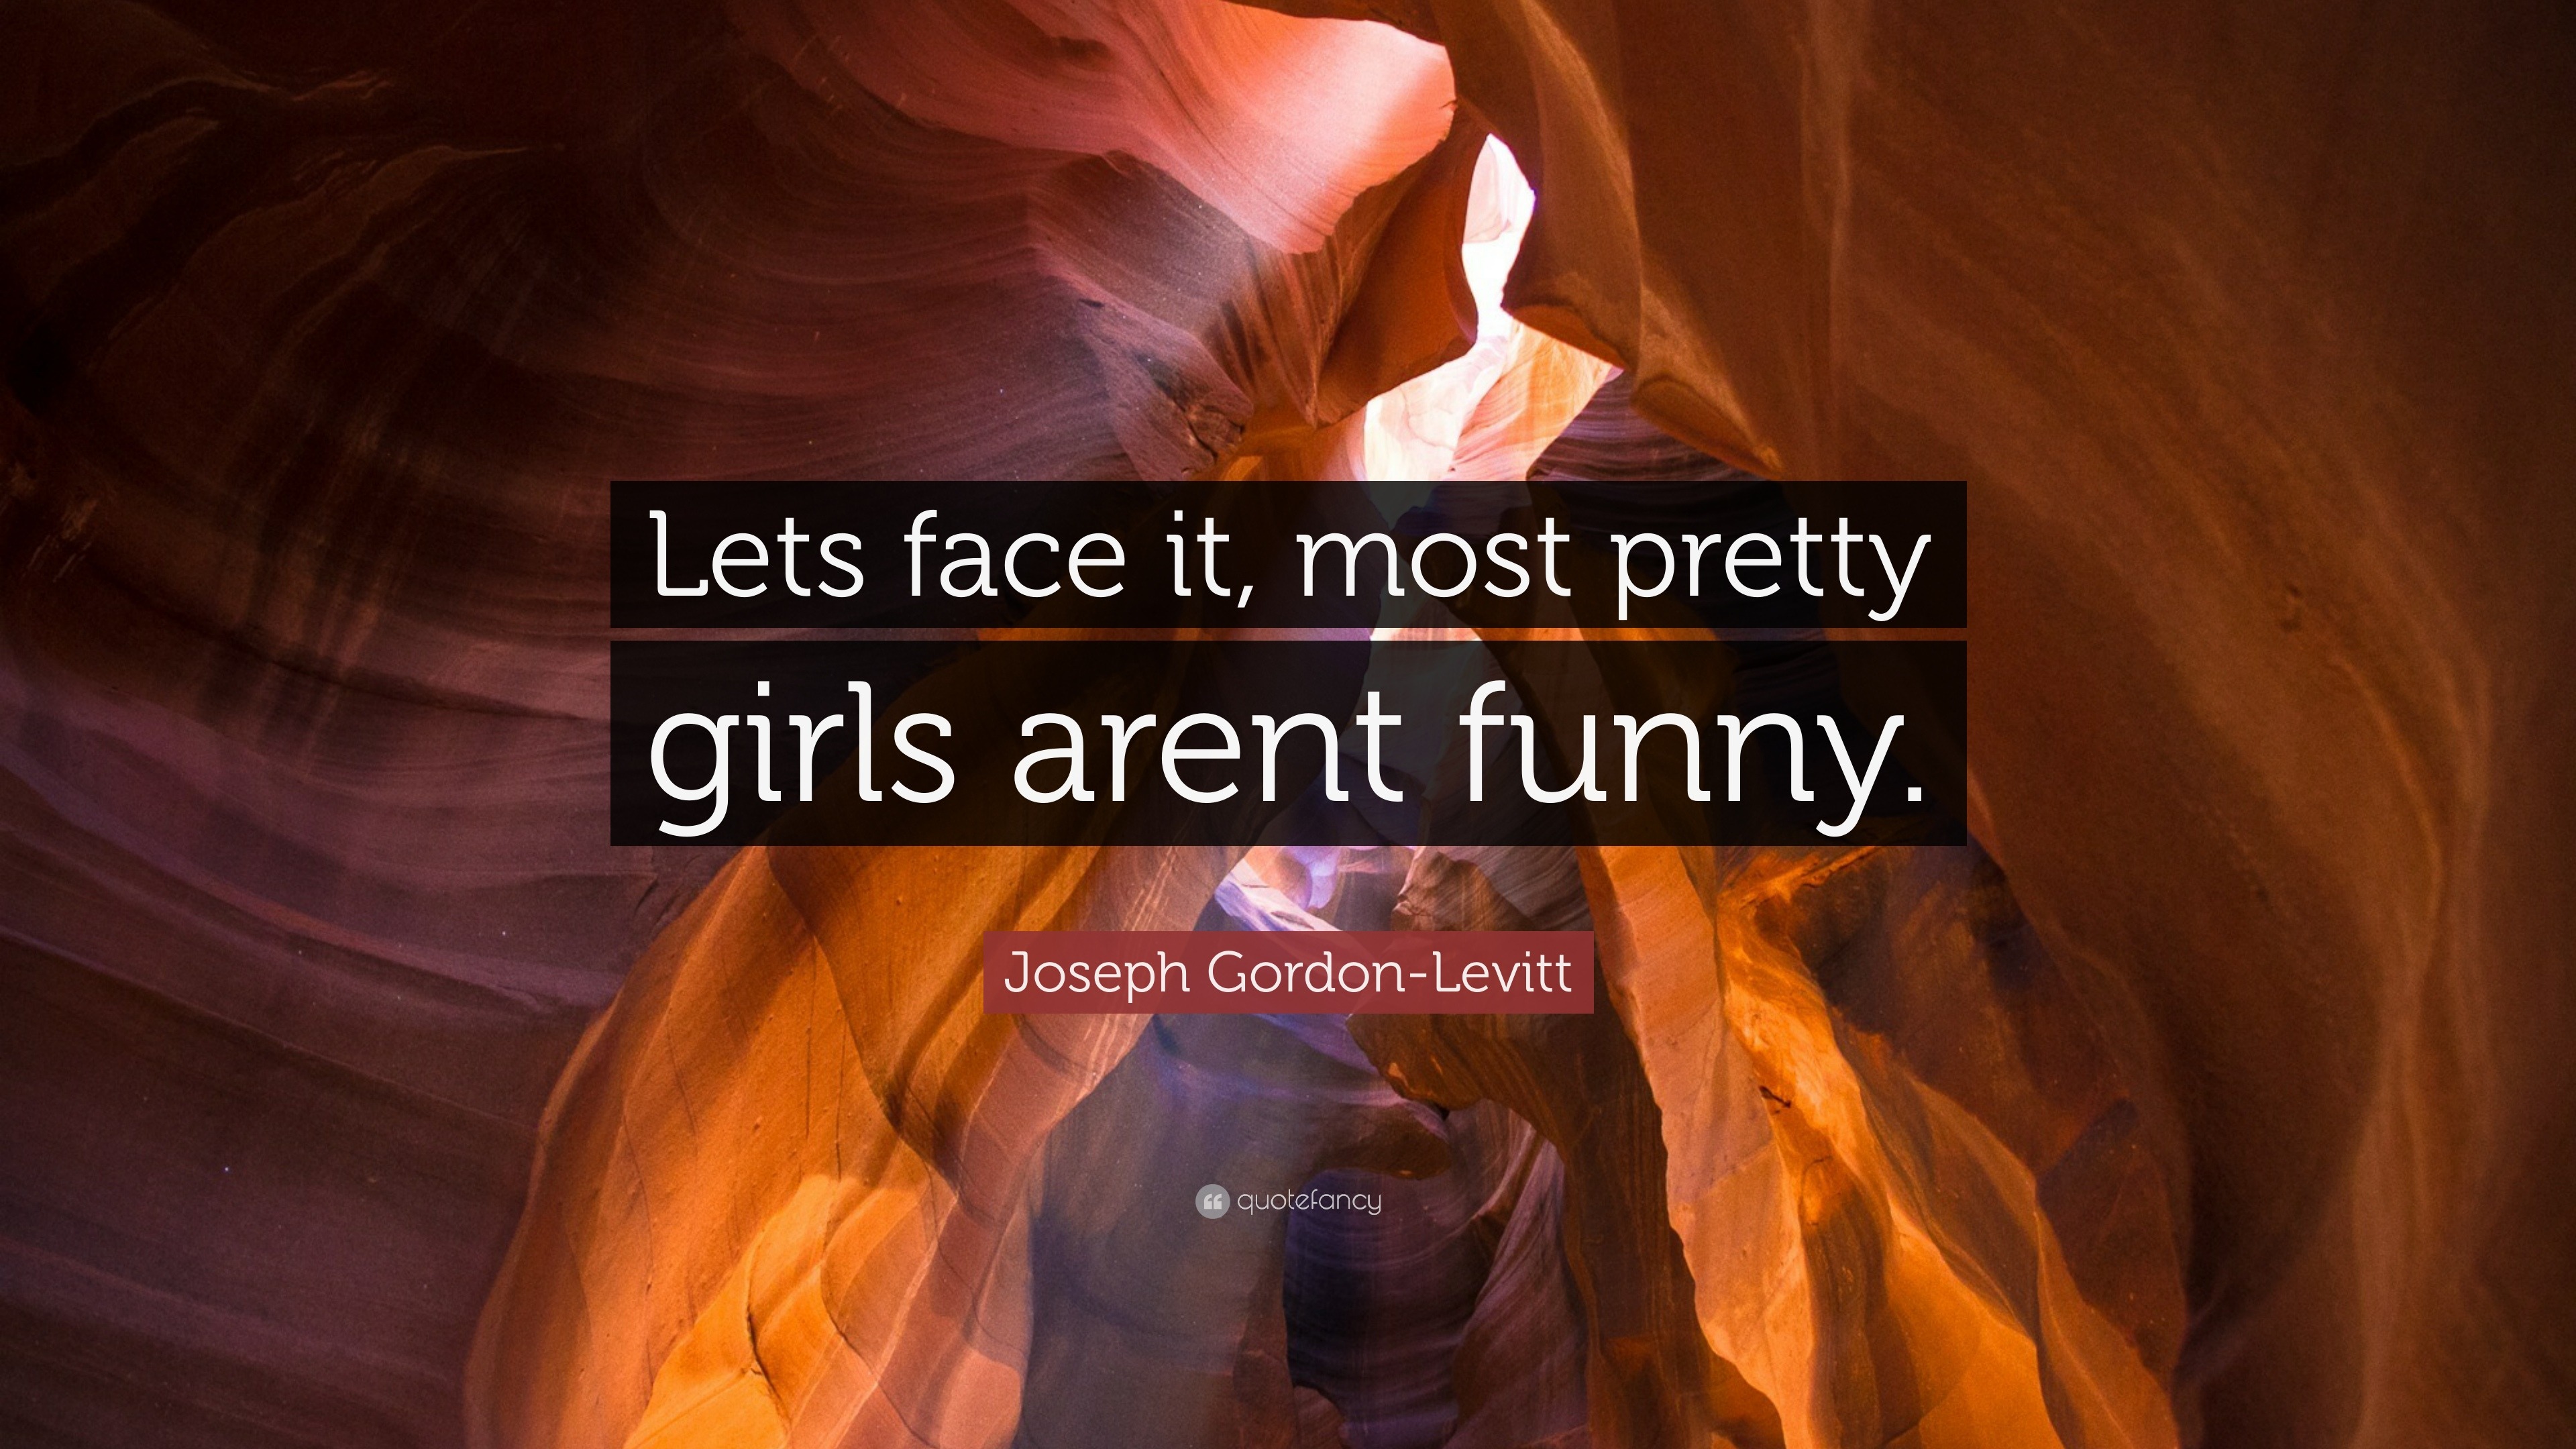 Joseph Gordon-Levitt Quote: “Lets face it, most pretty girls arent funny.”